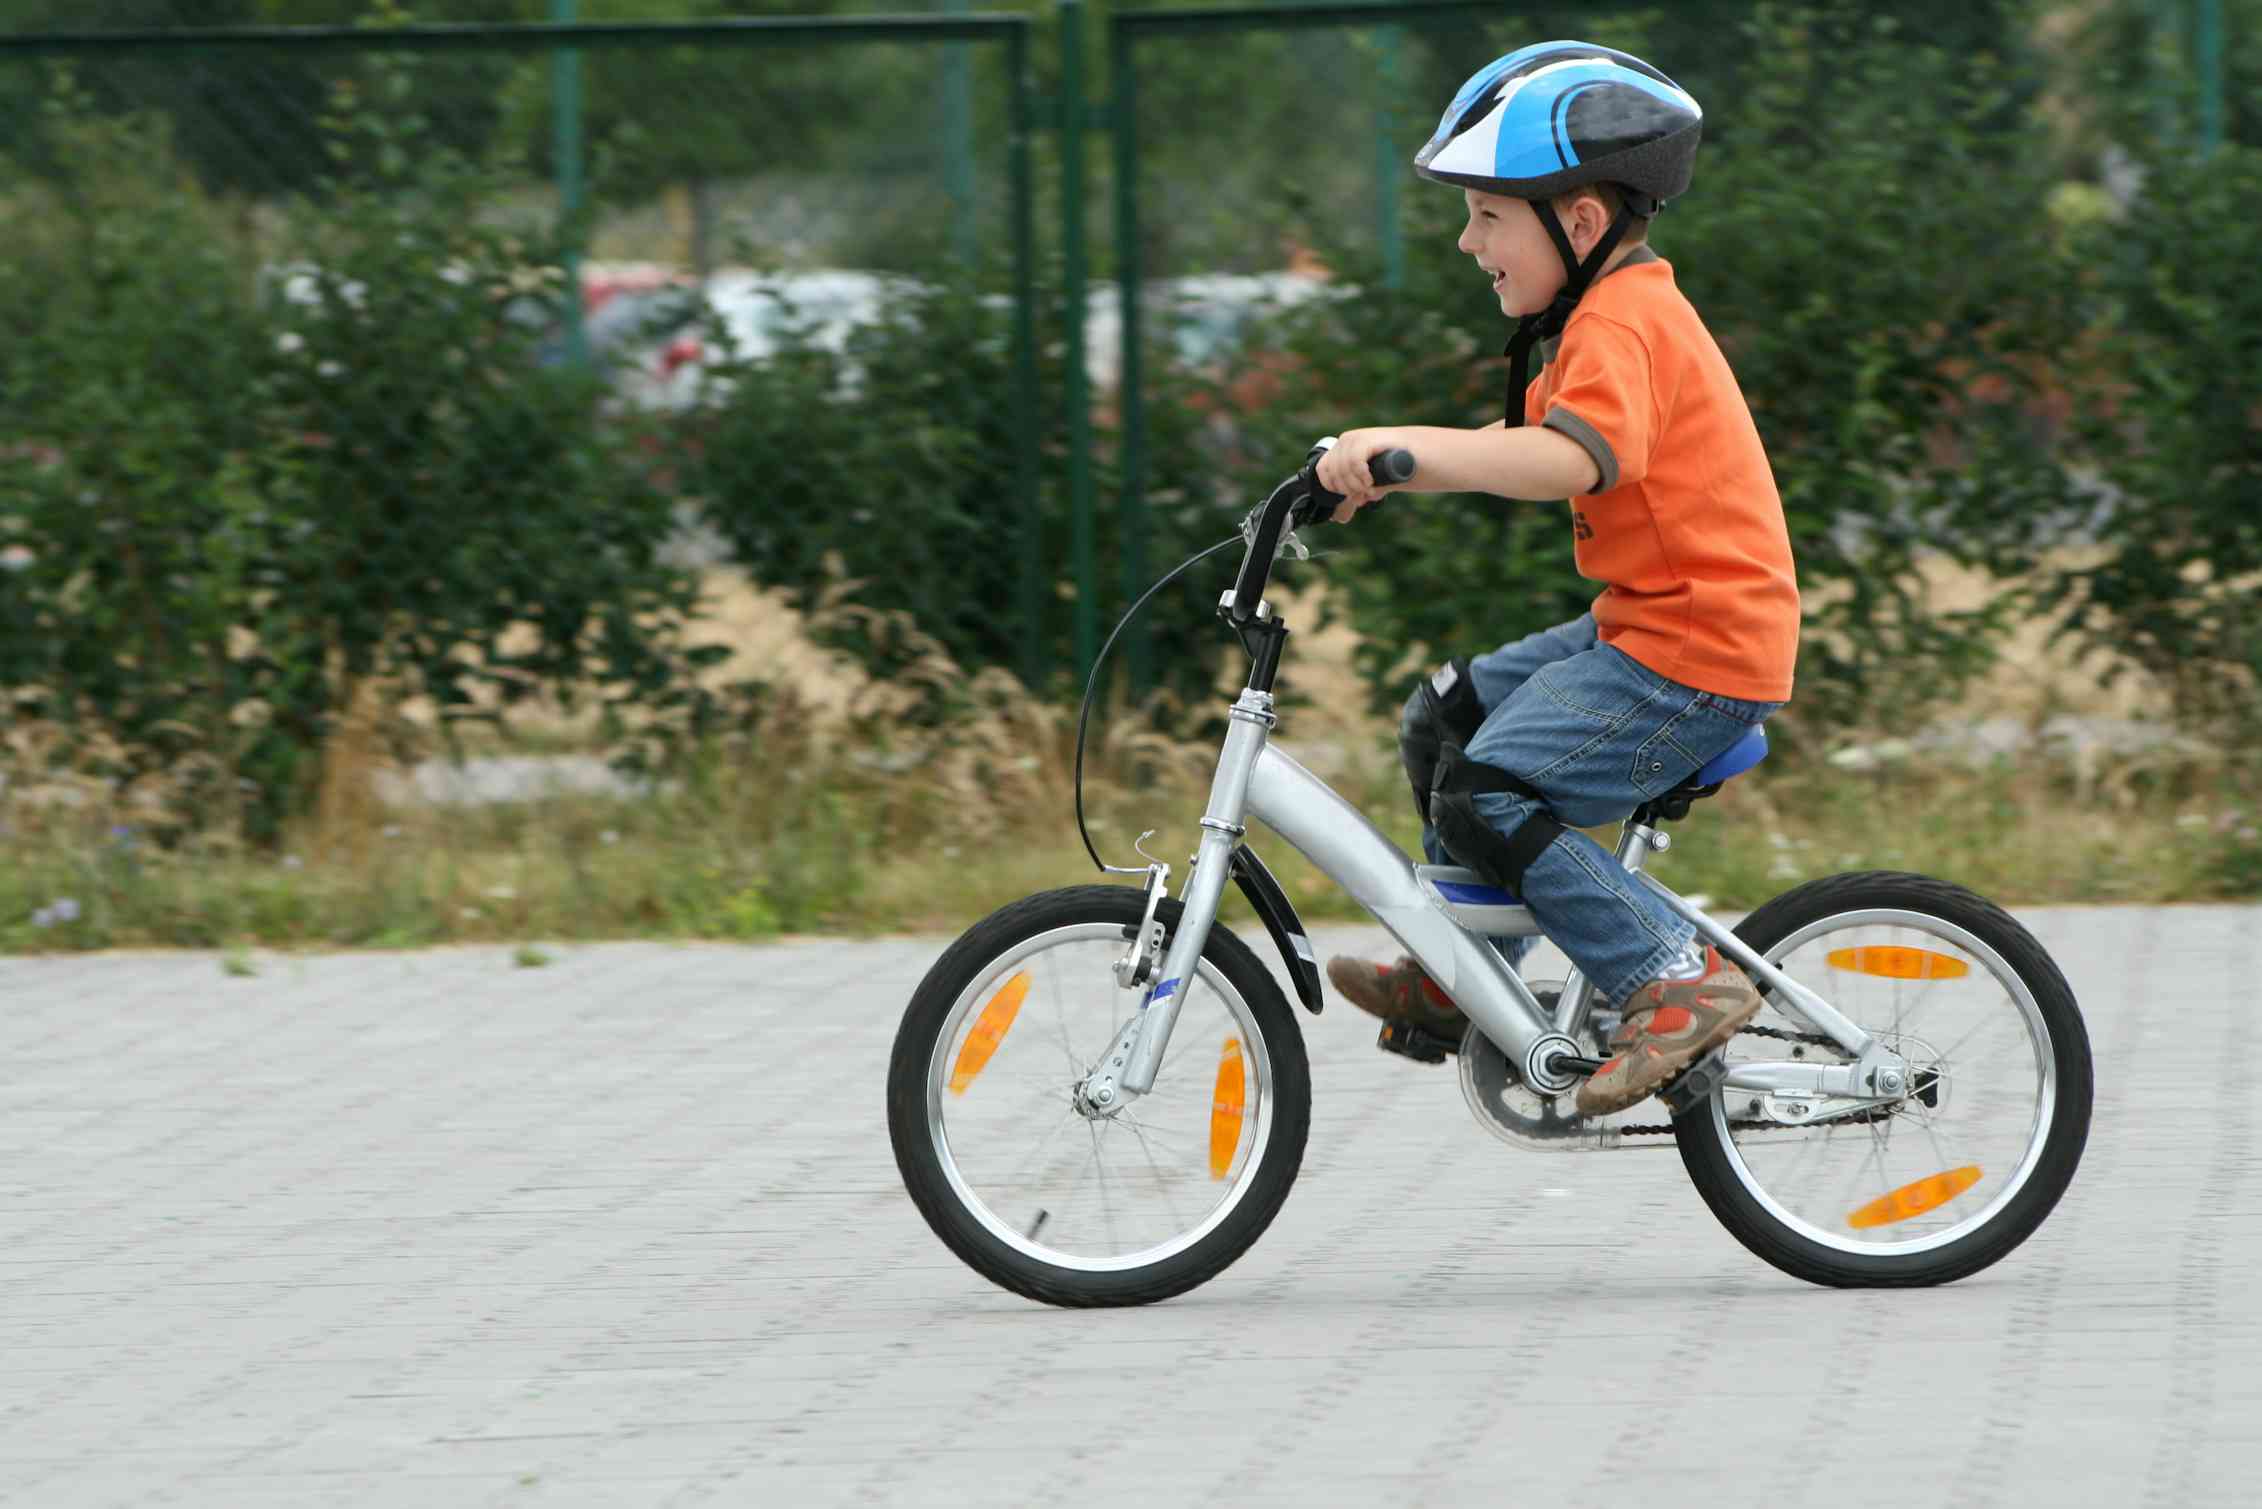 The children ride bikes